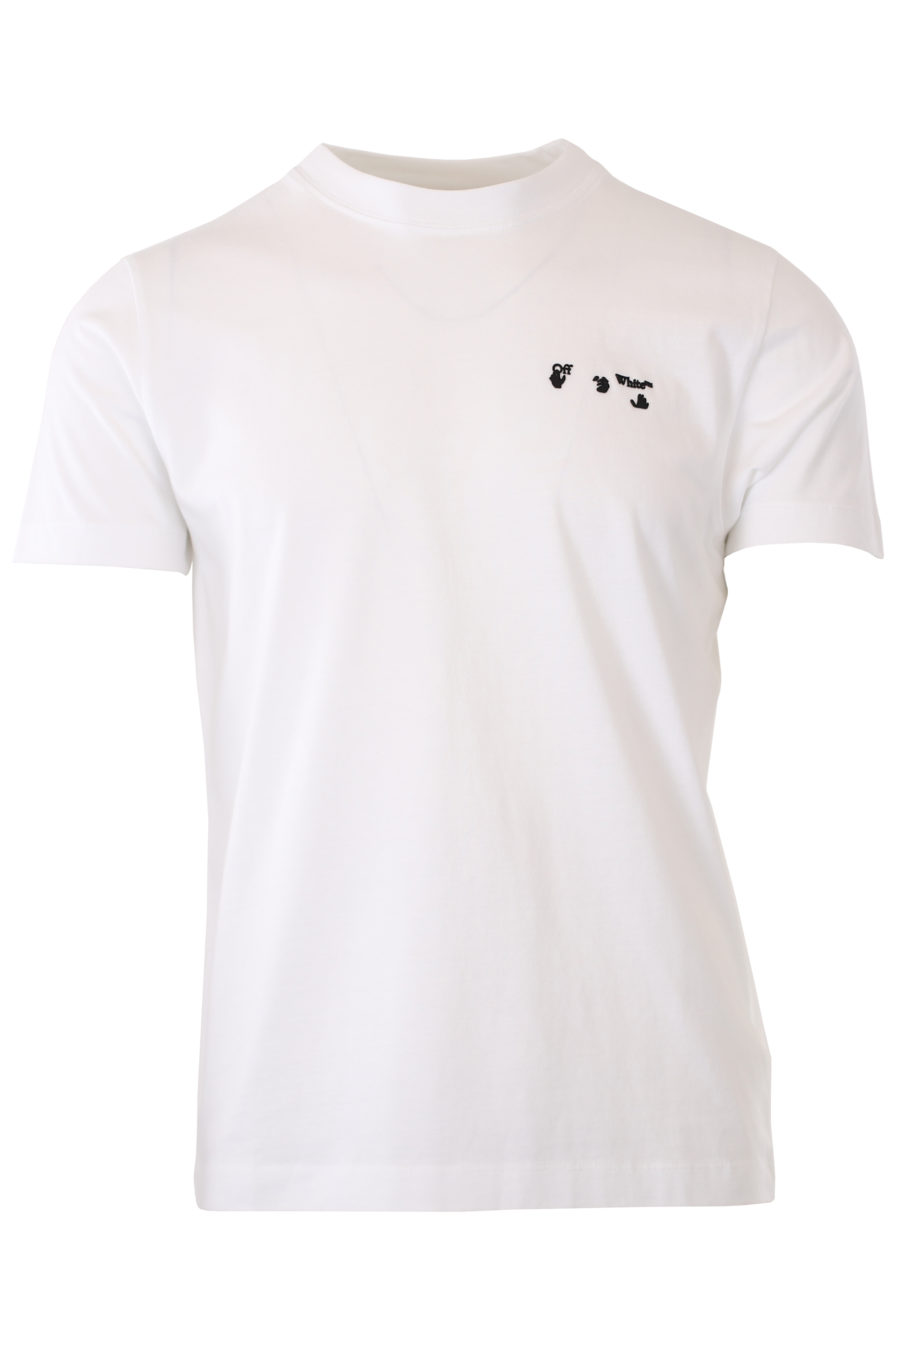 T-shirt blanc avec petit logo en noir - IMG 2340